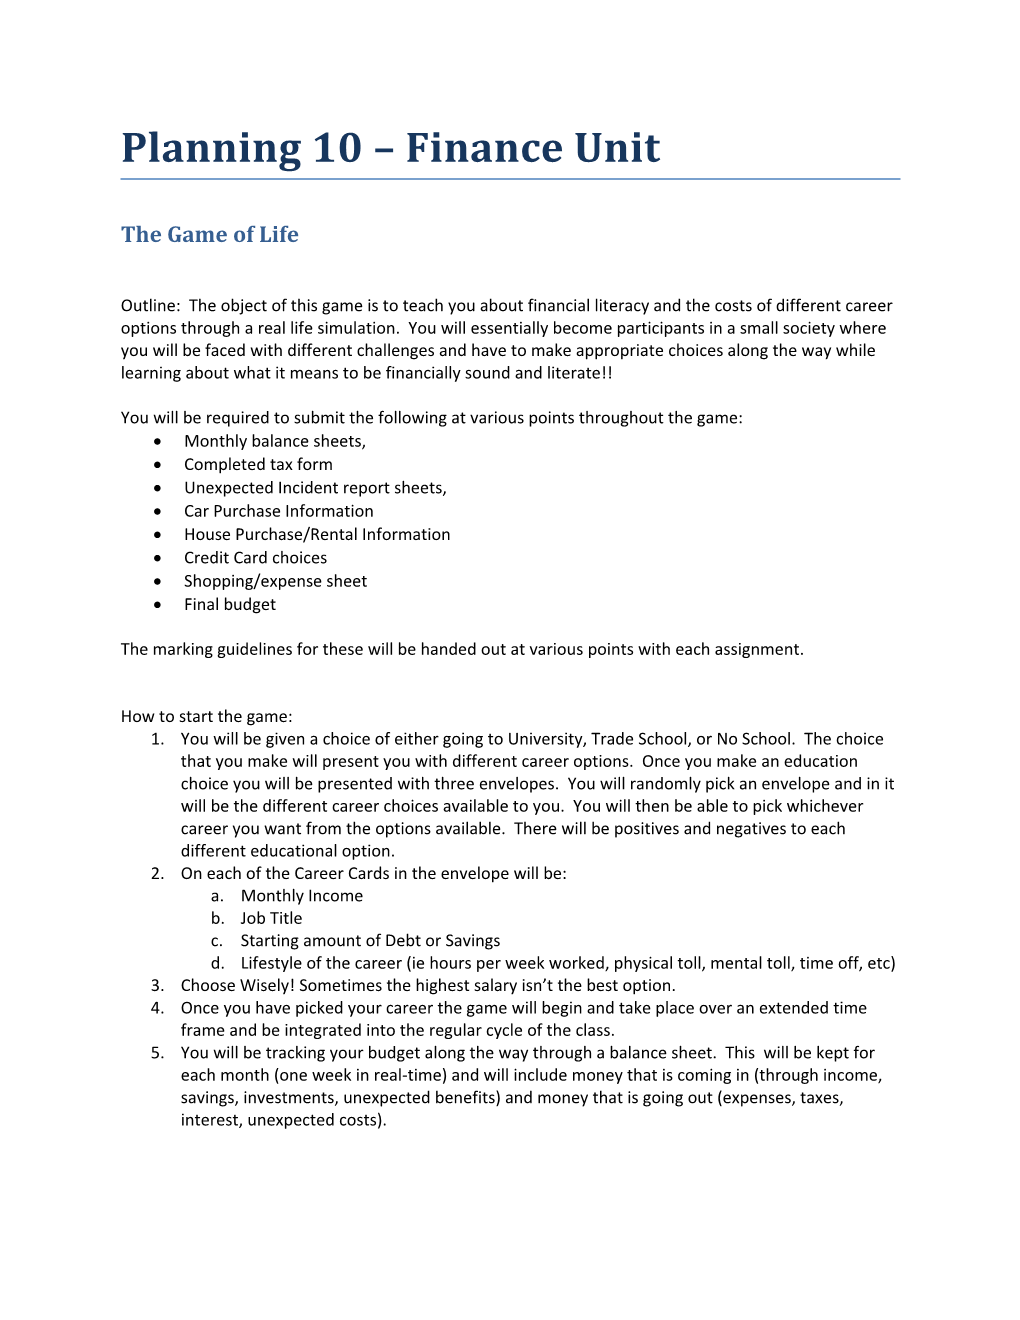 Planning 10 Finance Unit